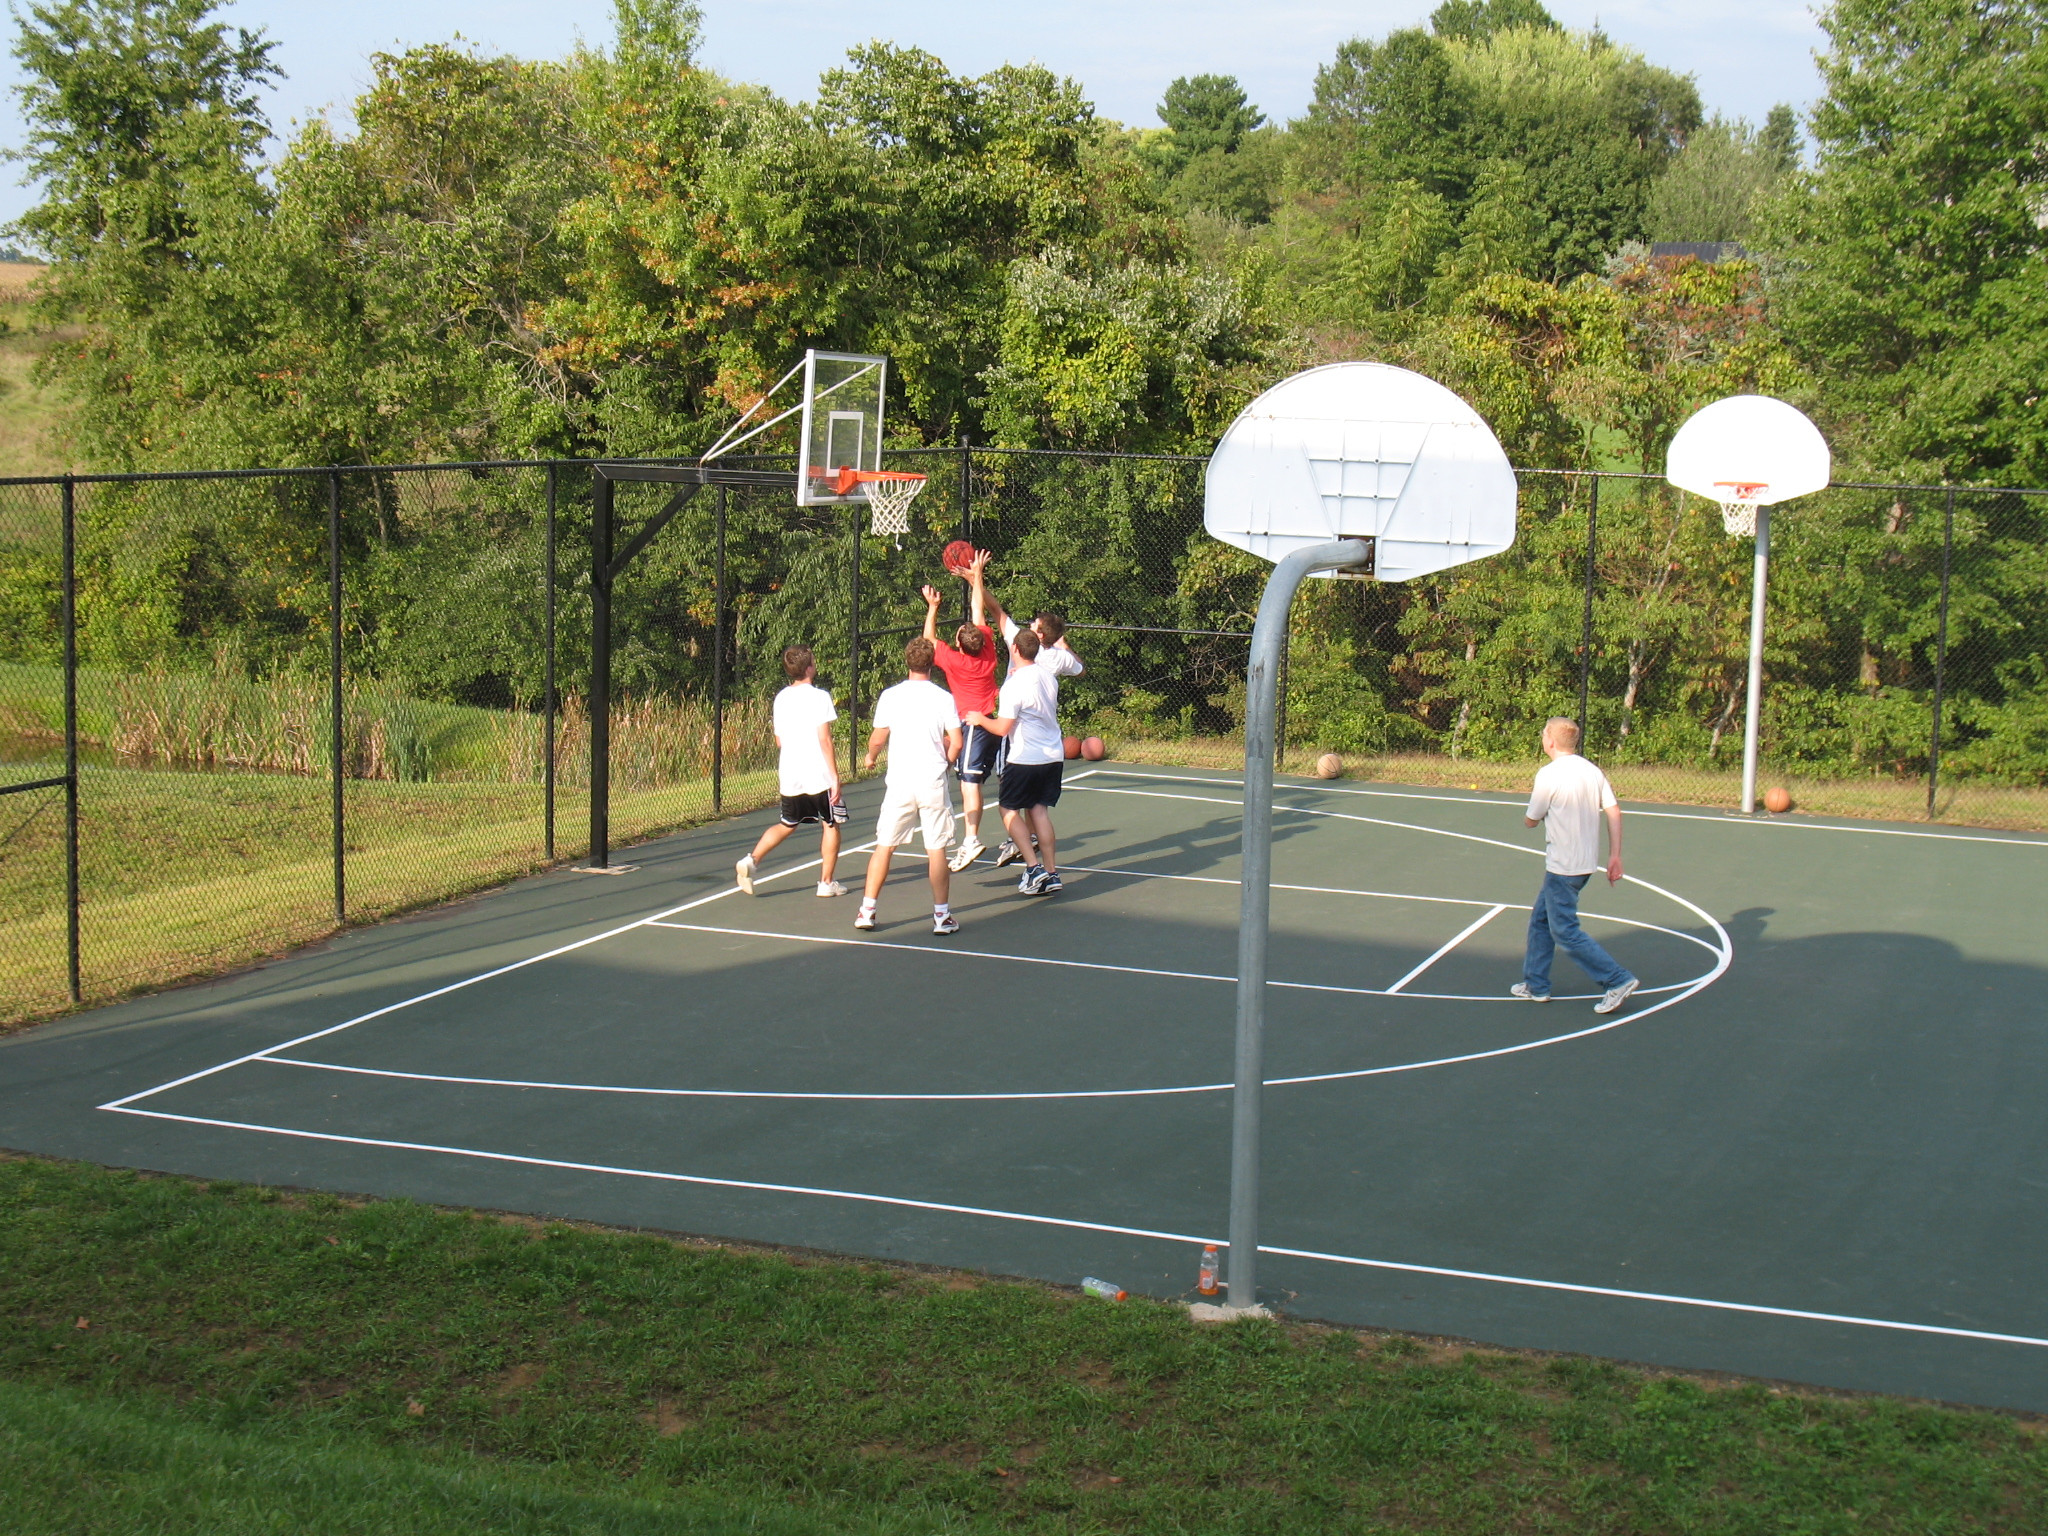 DIY Outdoor Basketball Court
 How to Make a DIY Backyard Basketball Court